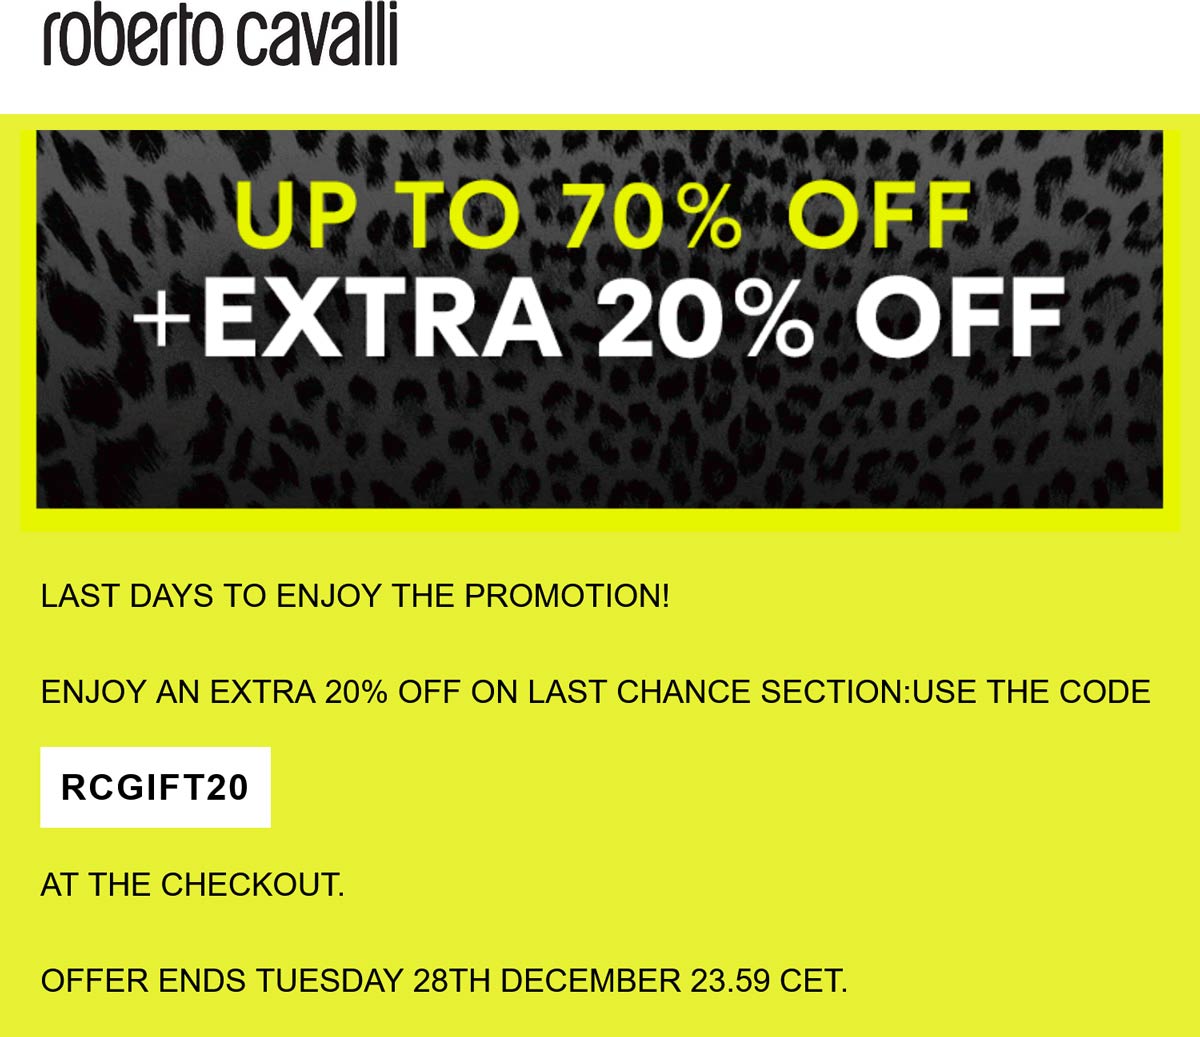 Roberto Cavalli coupons & promo code for [December 2022]